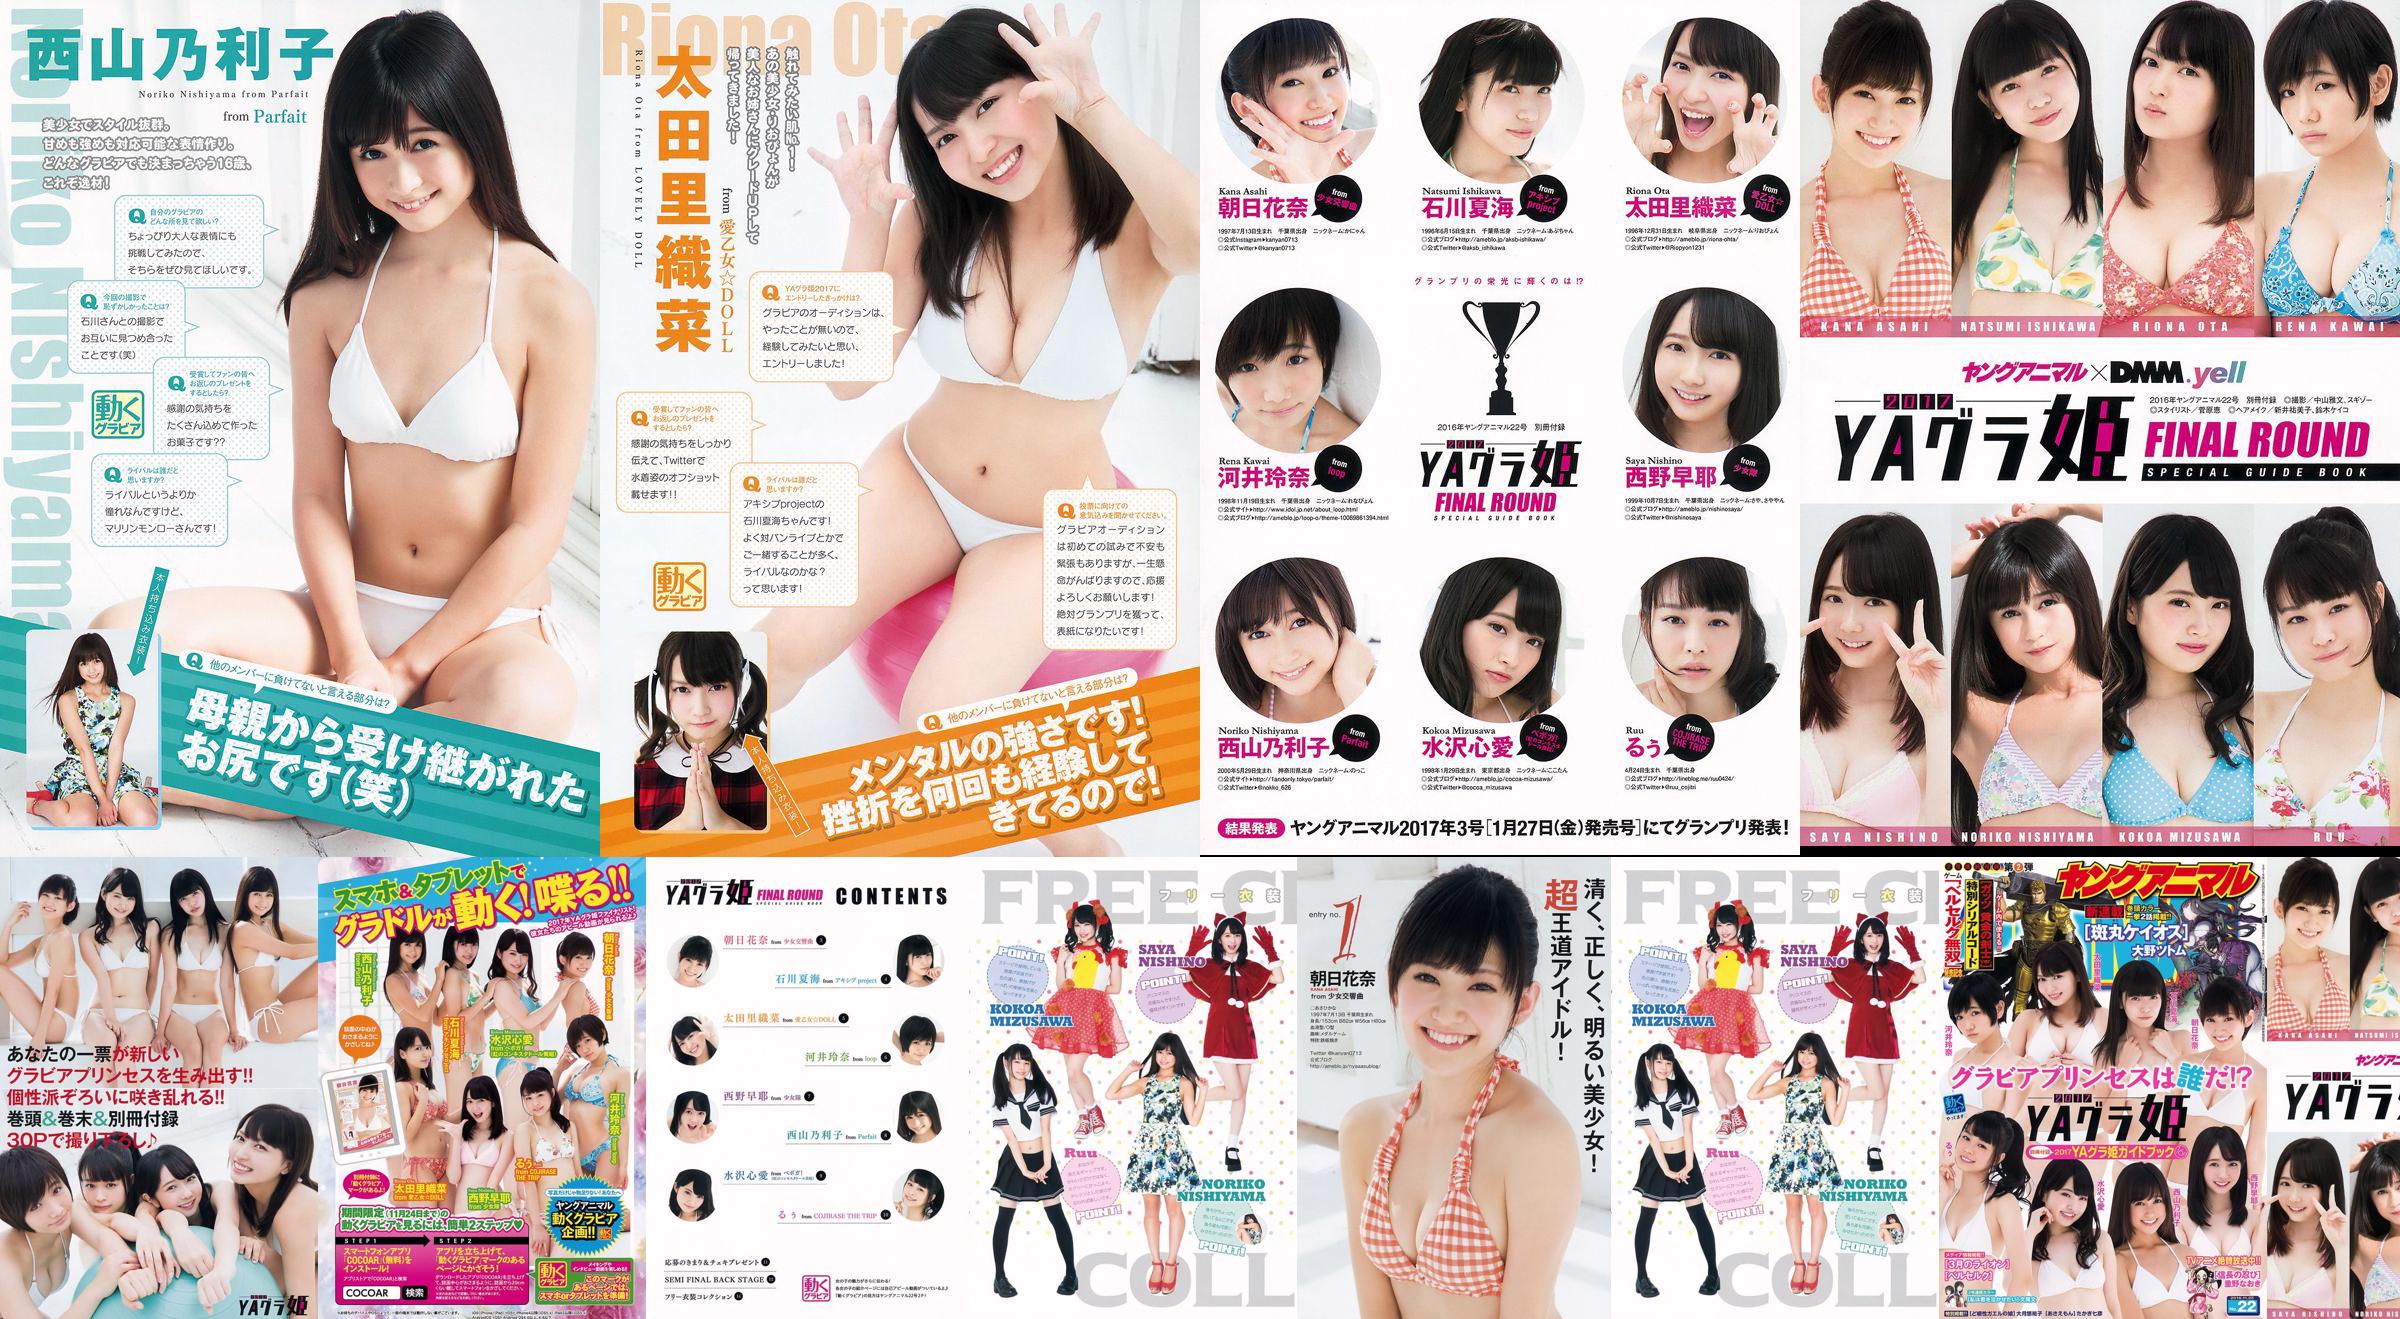 Mizusawa Beloved, Nishiyama Noriko, Nishino Haya, Kawai Reina, Ota Rina, Ishikawa Natsumi, Asahi Hana [น้องสัตว์] นิตยสารภาพถ่ายฉบับที่ 22 ประจำปี 2559 No.a70a7a หน้า 1